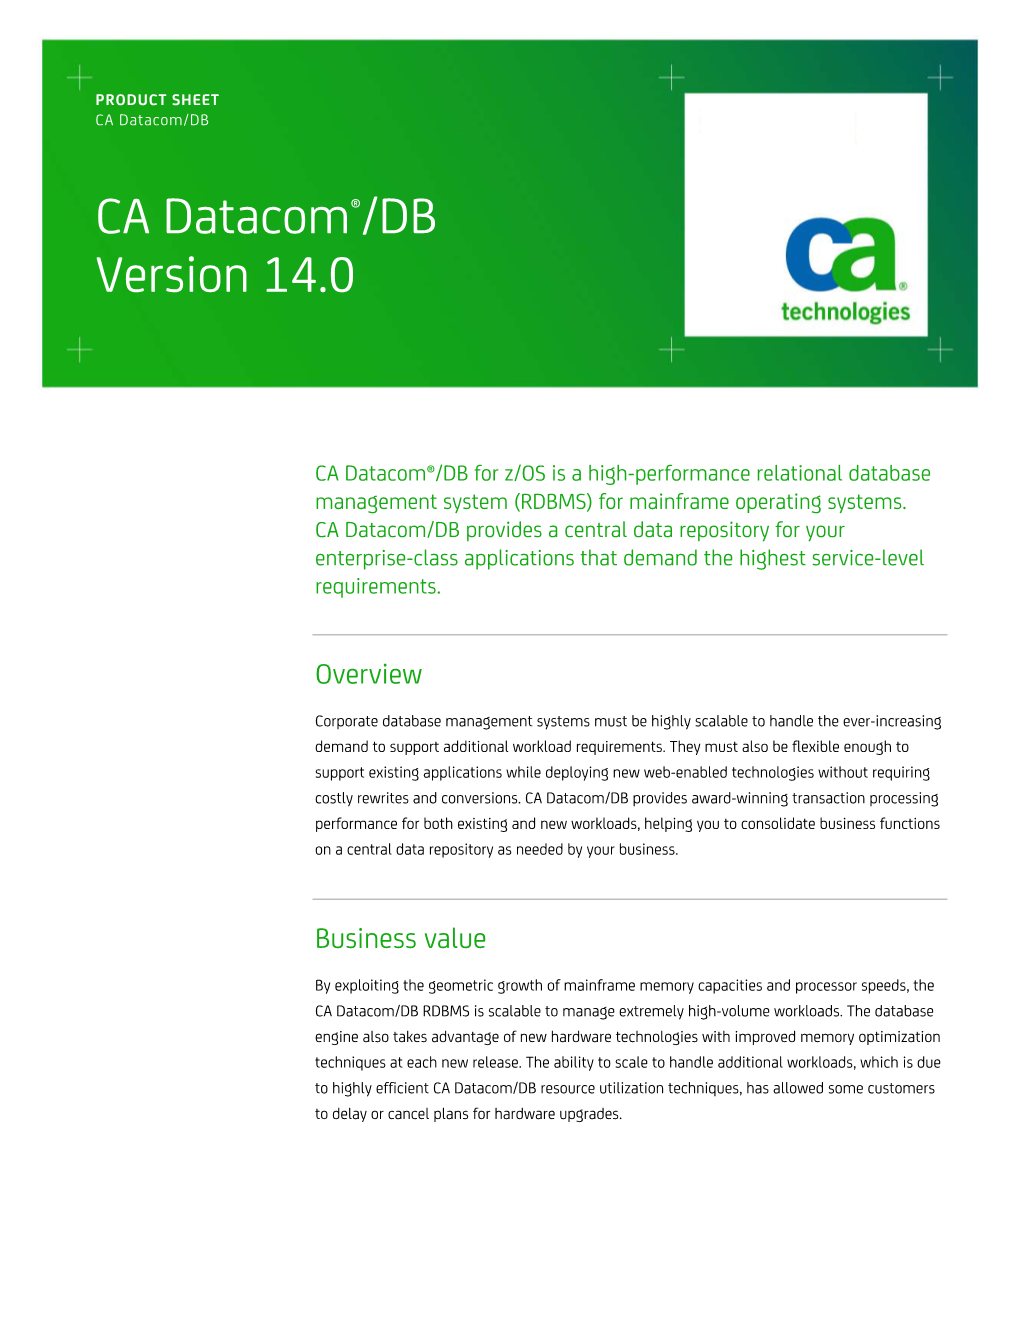 CA Datacom/DB